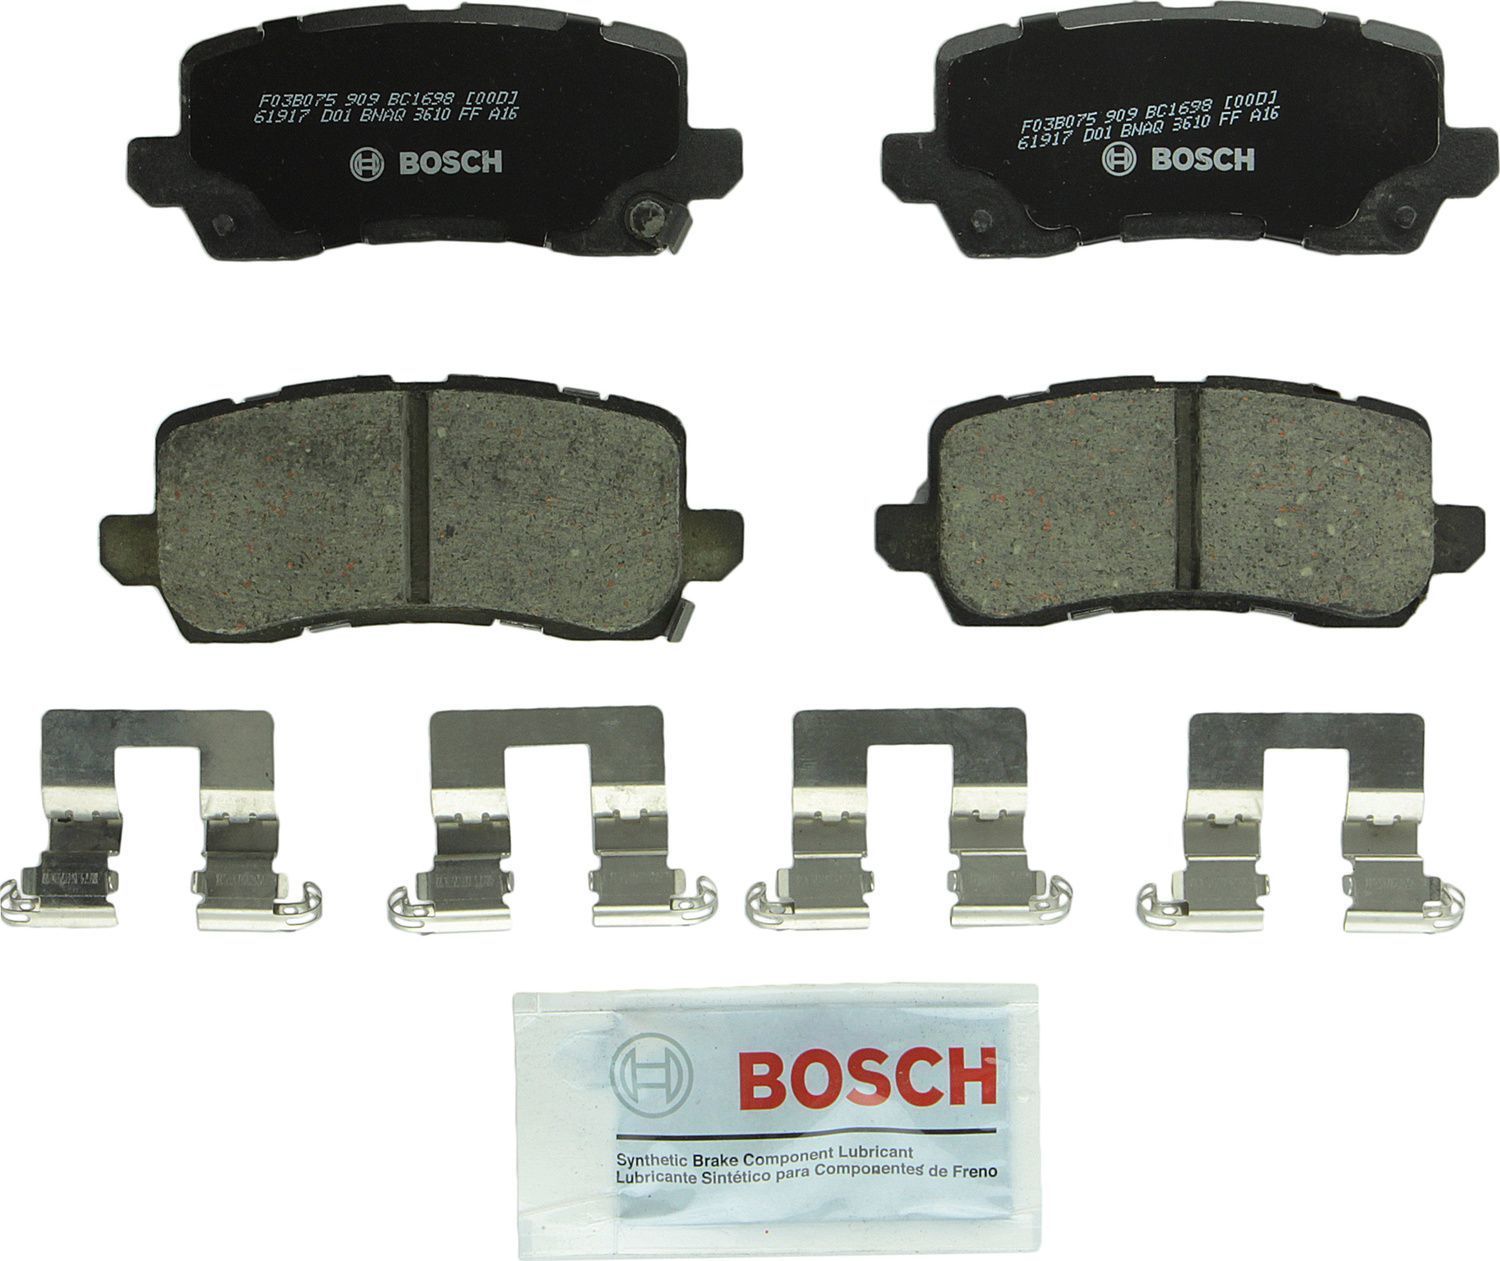 BOSCH BRAKE - Bosch QuietCast Brake Pad Ceramic Brake Pads (Rear) - BQC BC1698